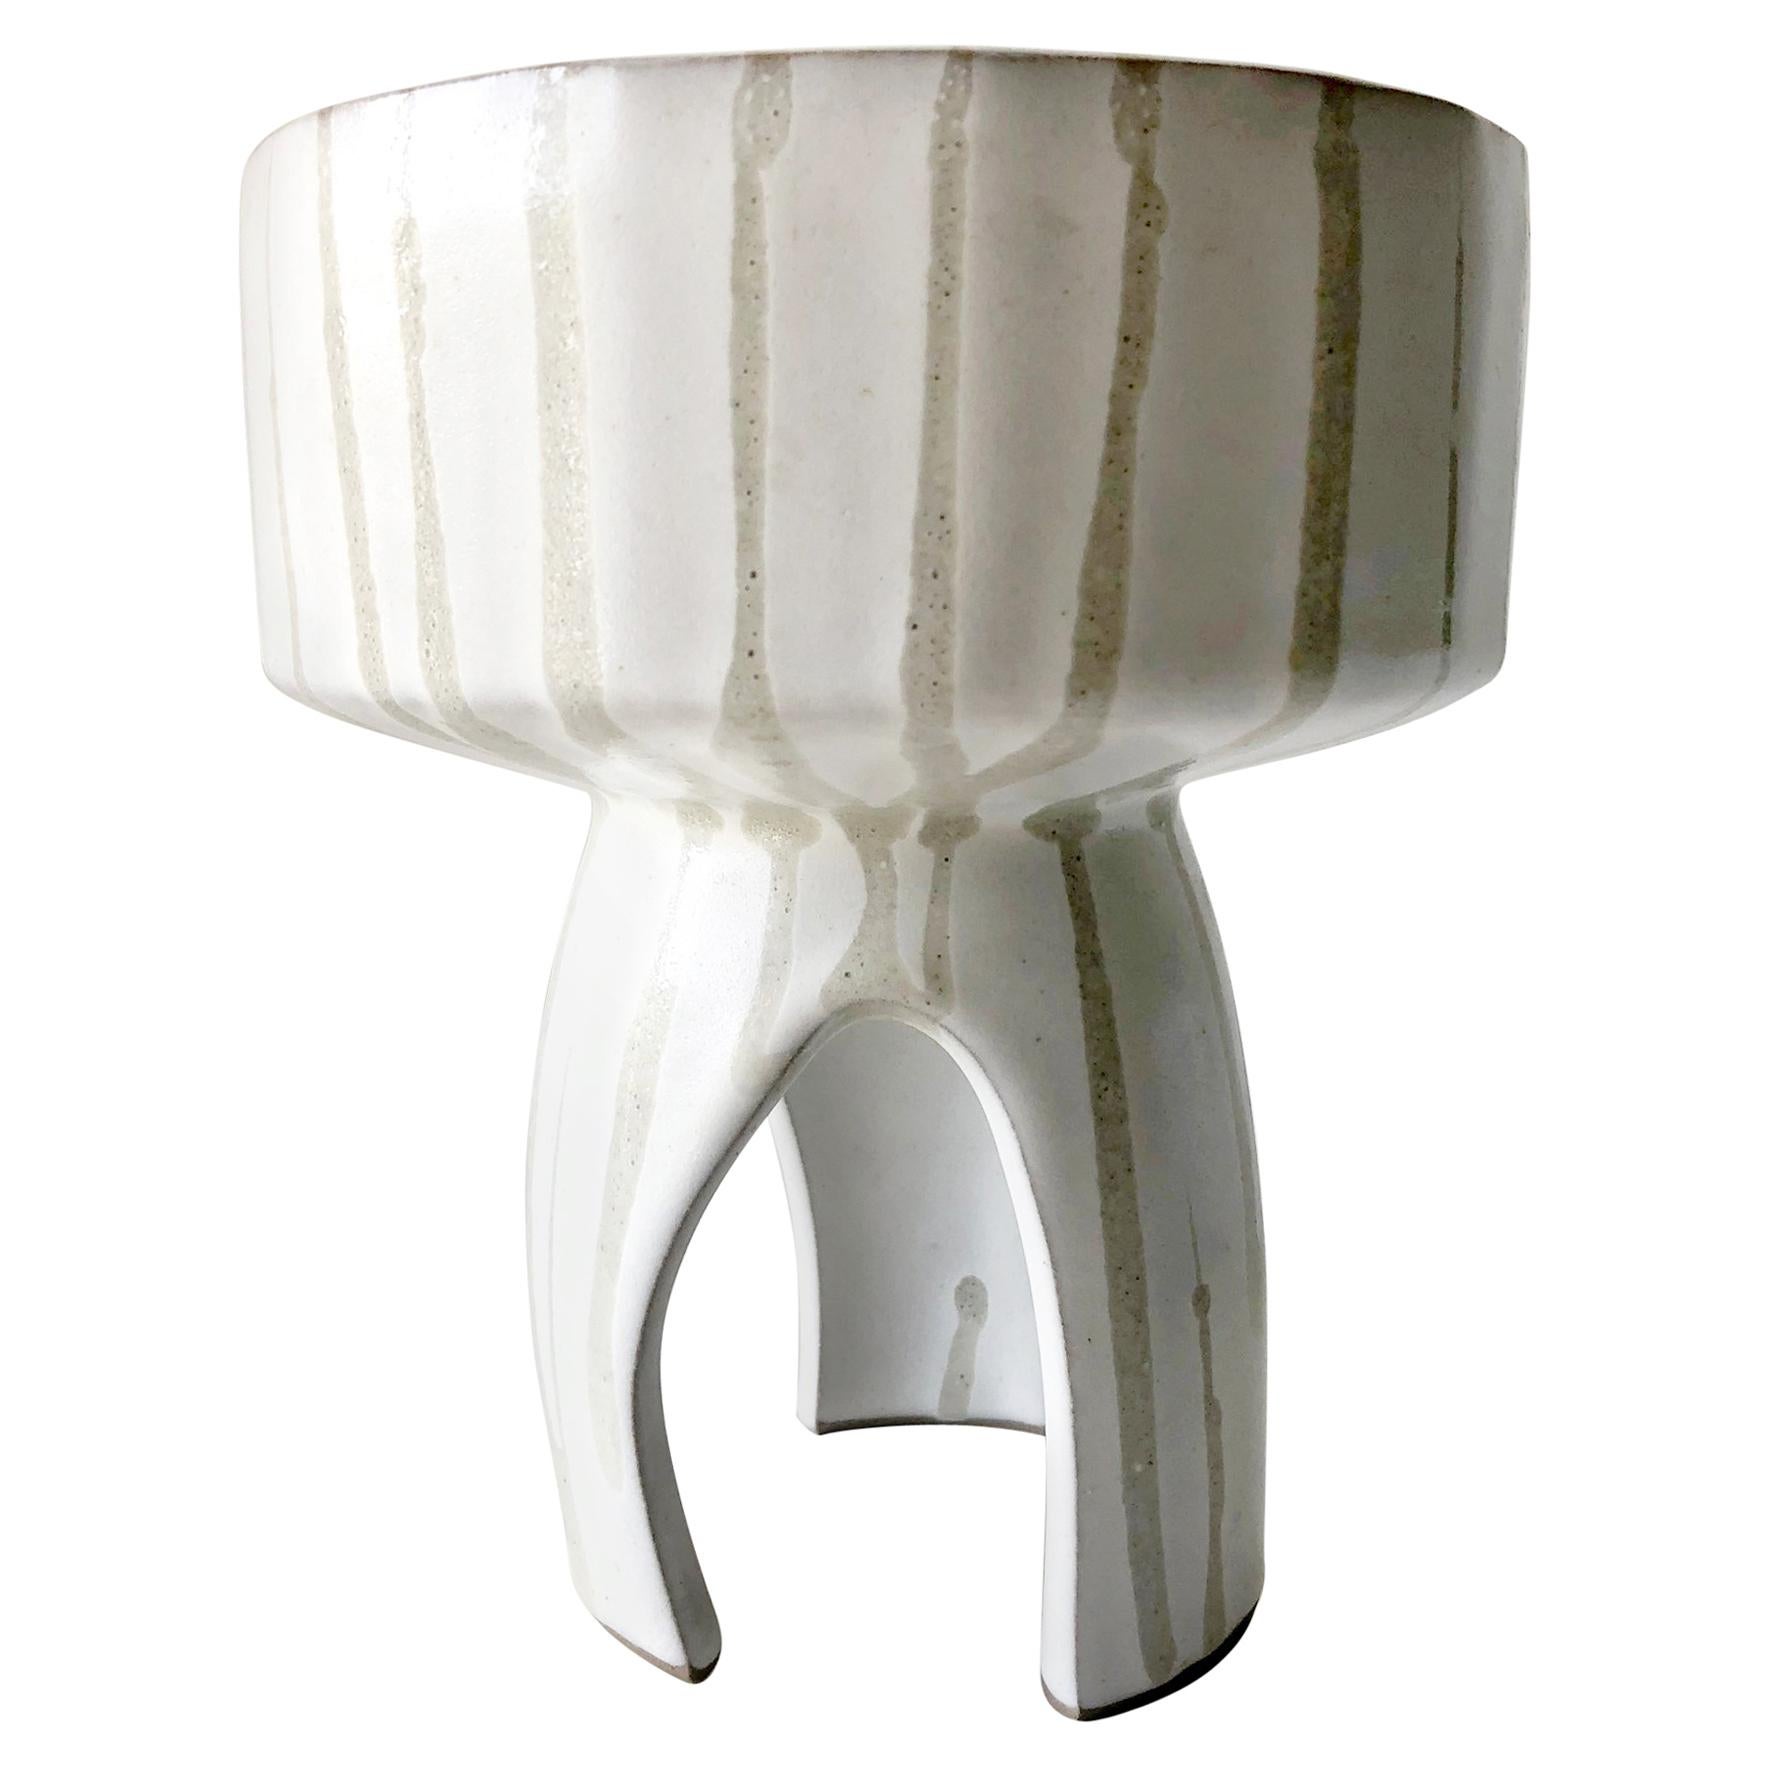 Japanese Modernist Ceramic Ikebana Vase